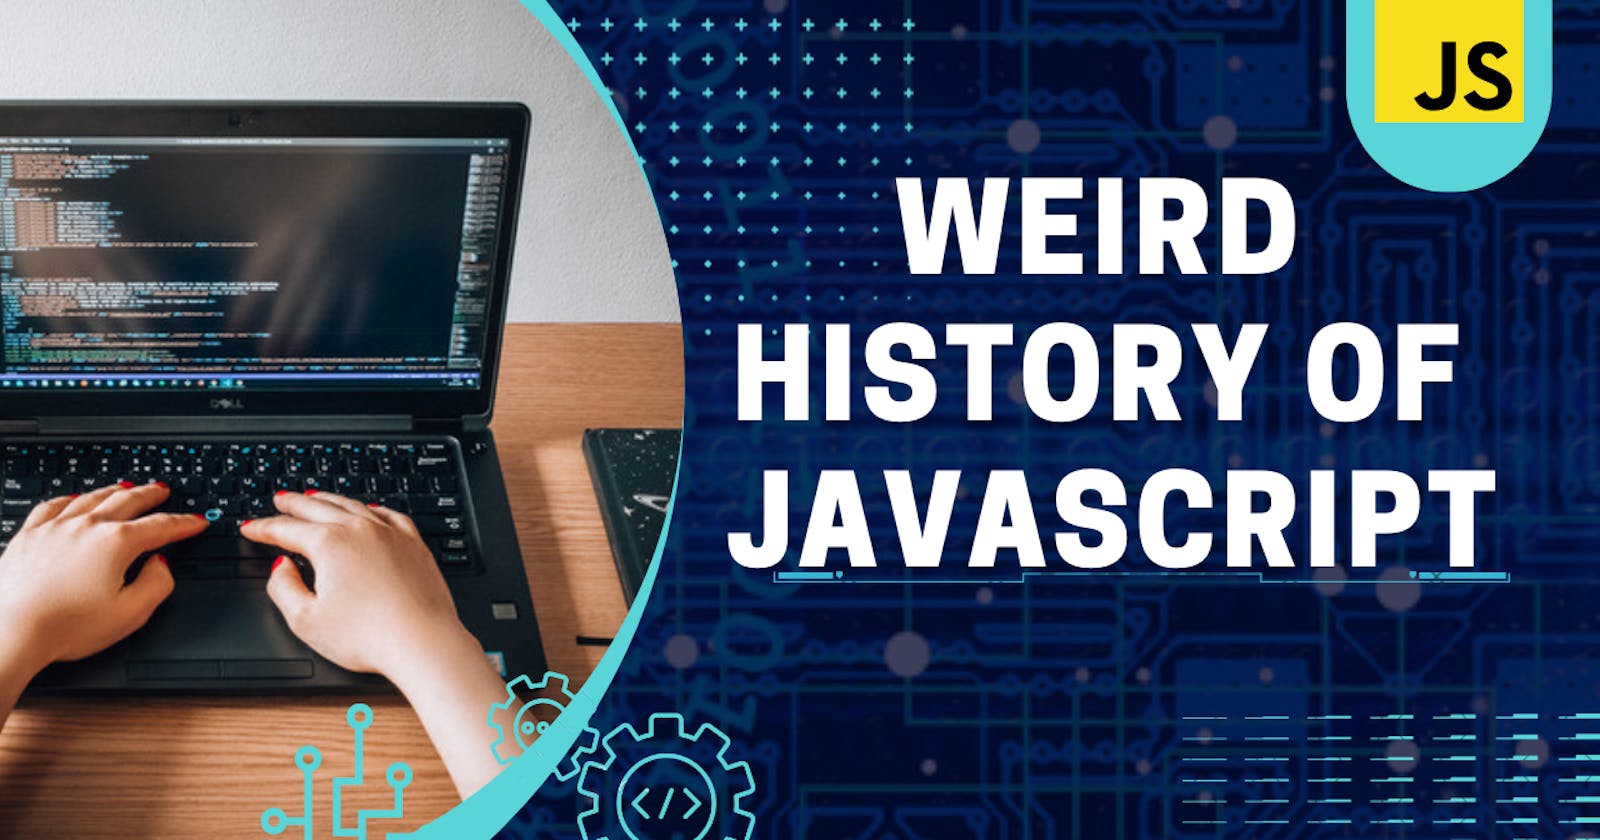 Weird History of Javascript